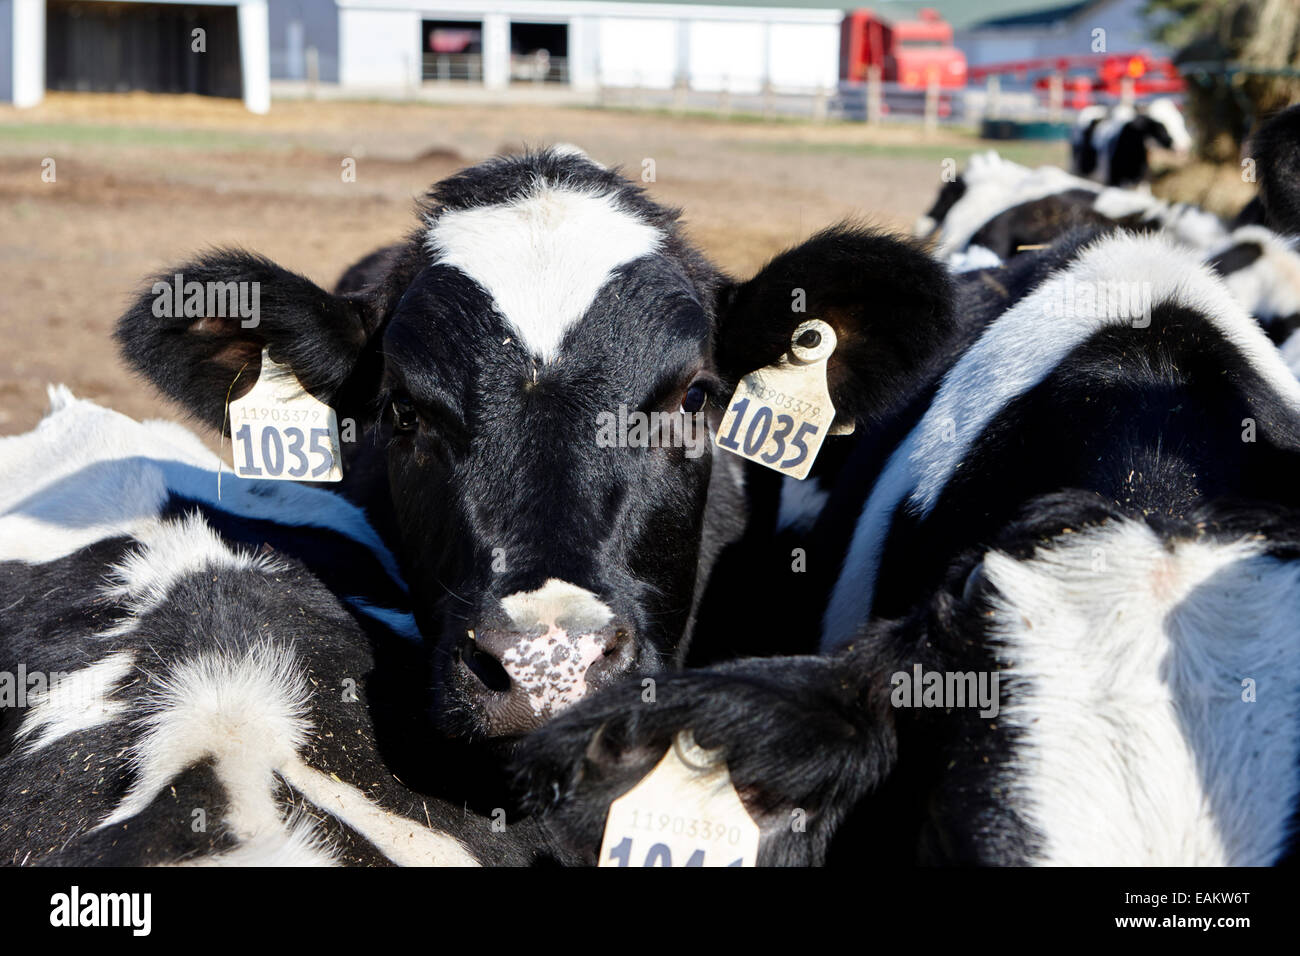 cow with ear tags beef cattle herd saskatoon Saskatchewan Canada Stock Photo